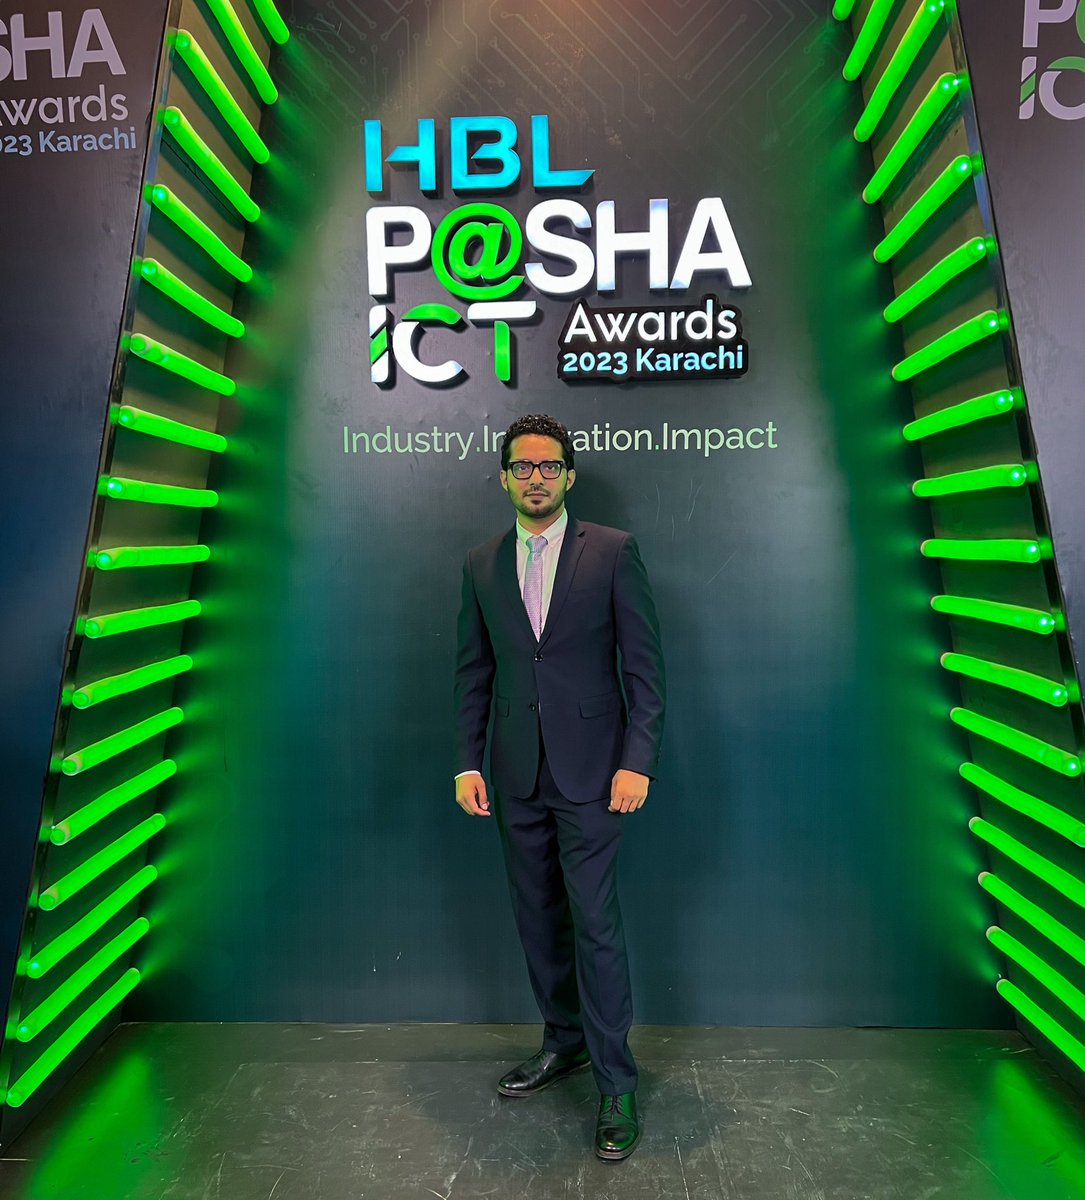 HBL P@SHA ICT Awards

#HBL #PASHA #PASHAICTAWRDS #TechDestinationPakistan 

@PASHAORG